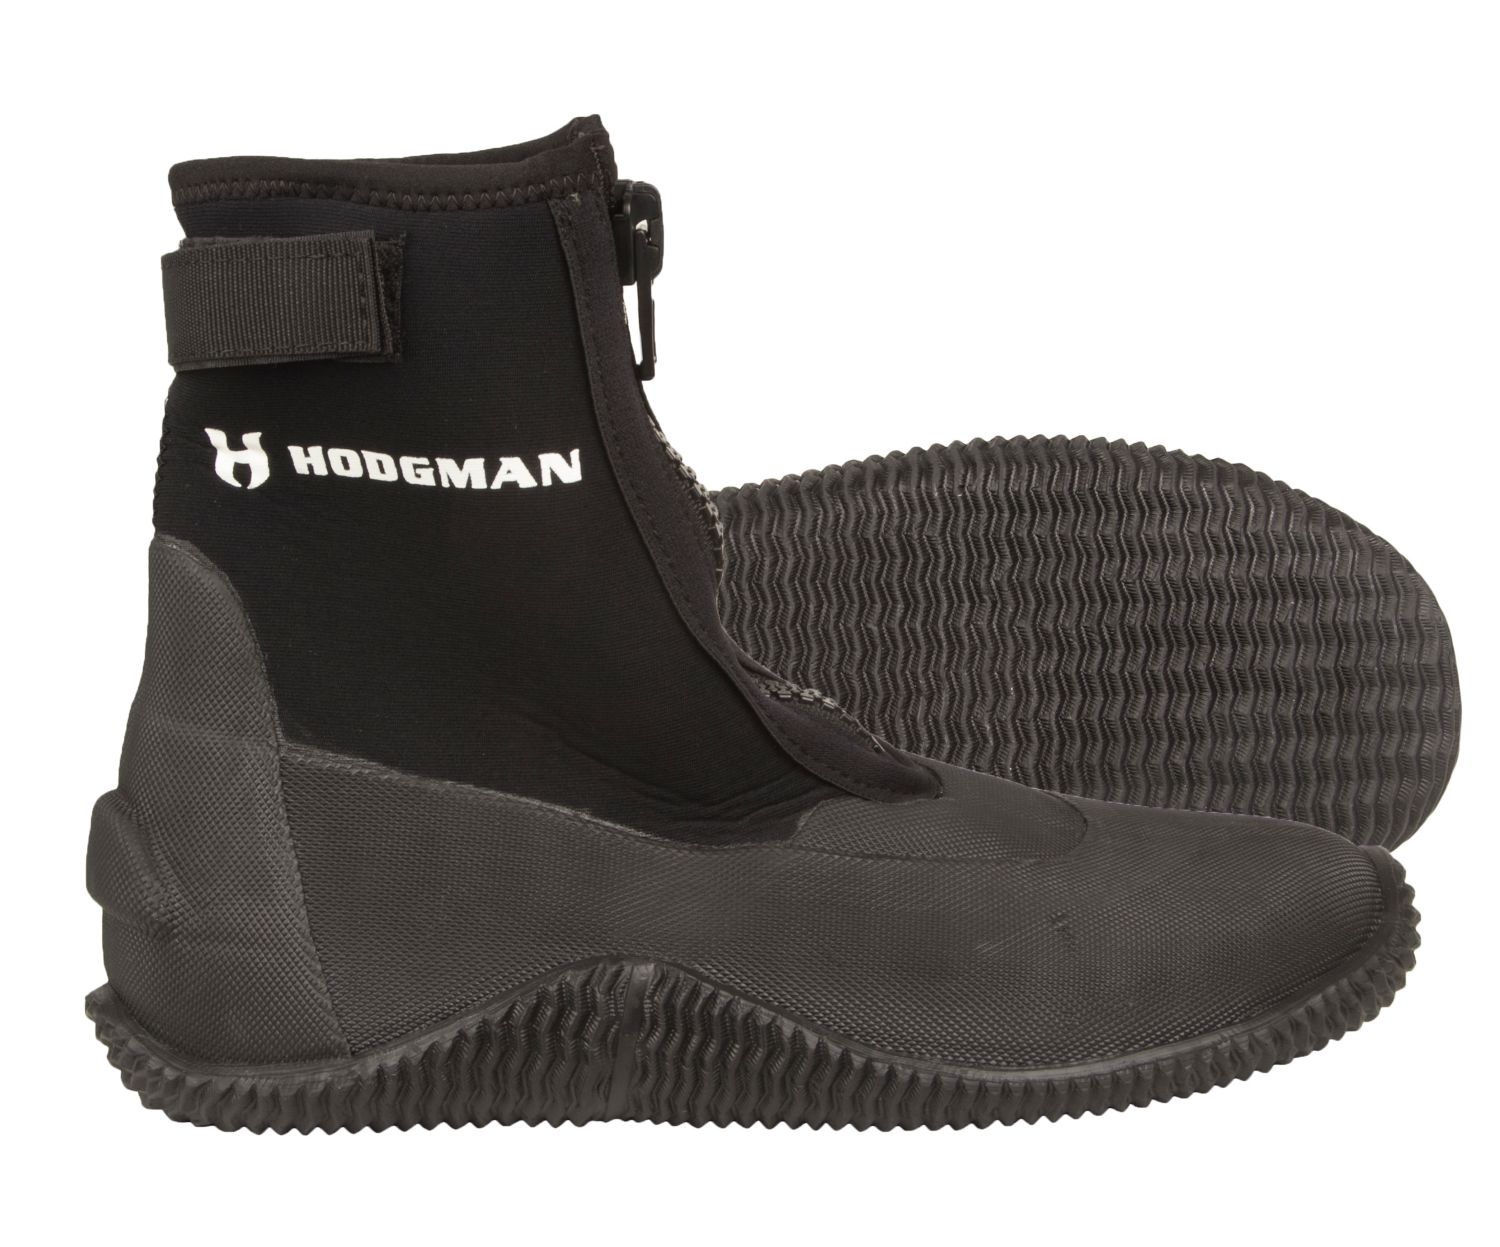 Hodgman Neoprene Wading Shoes - AustinKayak